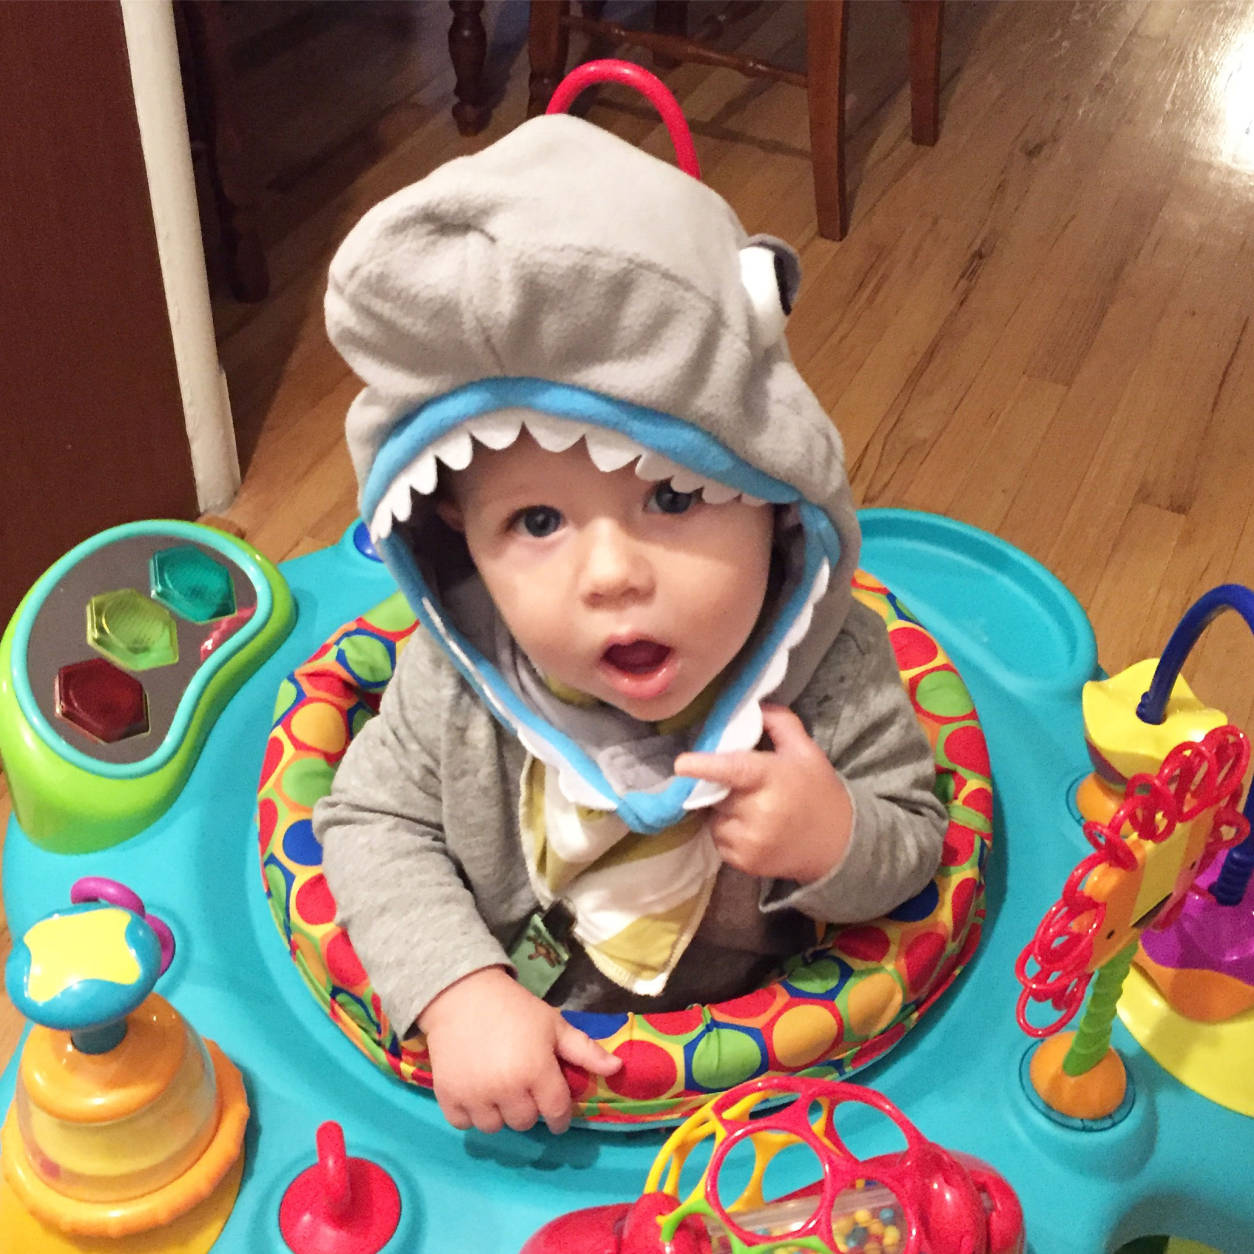 WTOP Living Editor Rachel Nania's adorable little Shark, Isaac, 8 month old.